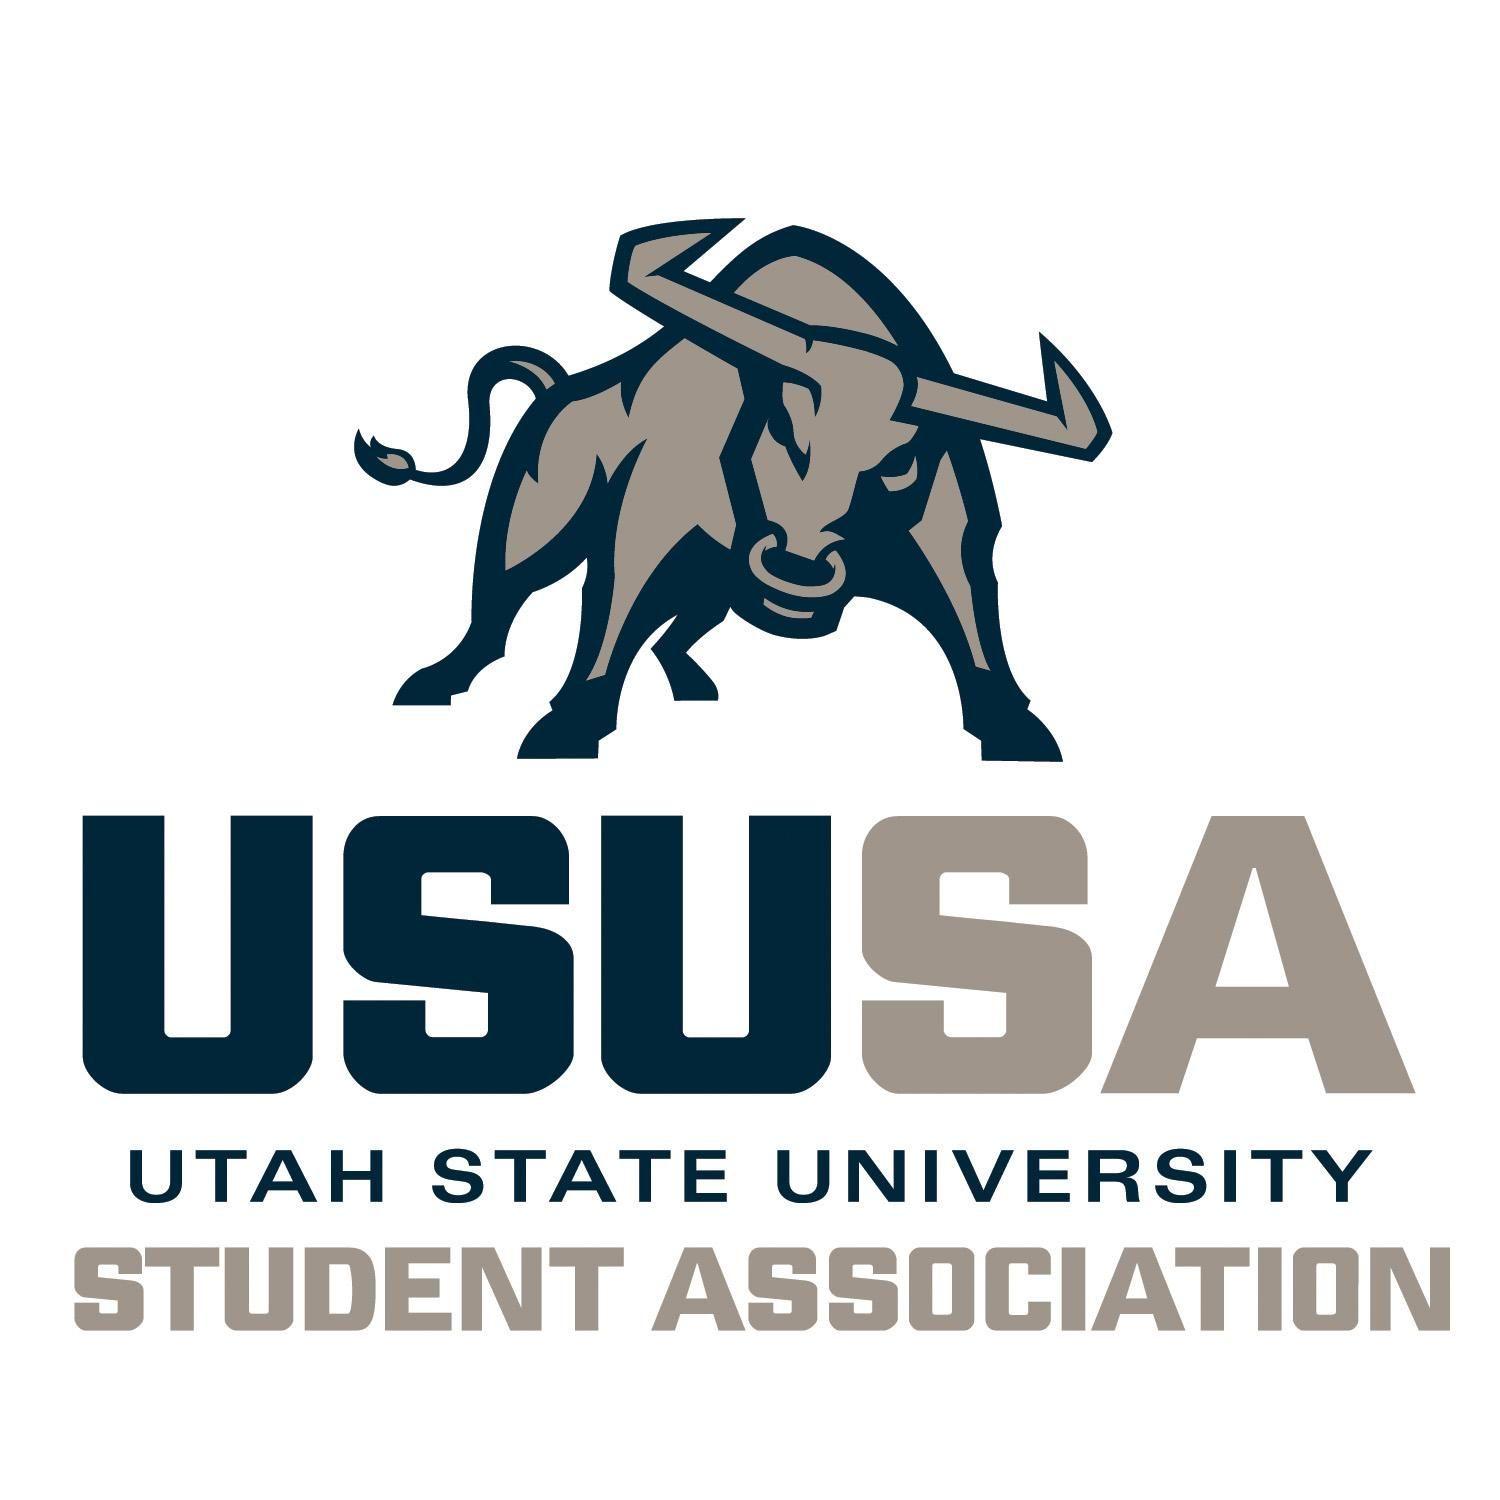 USU Logo - New logo approved for USU Student Association - The Utah Statesman